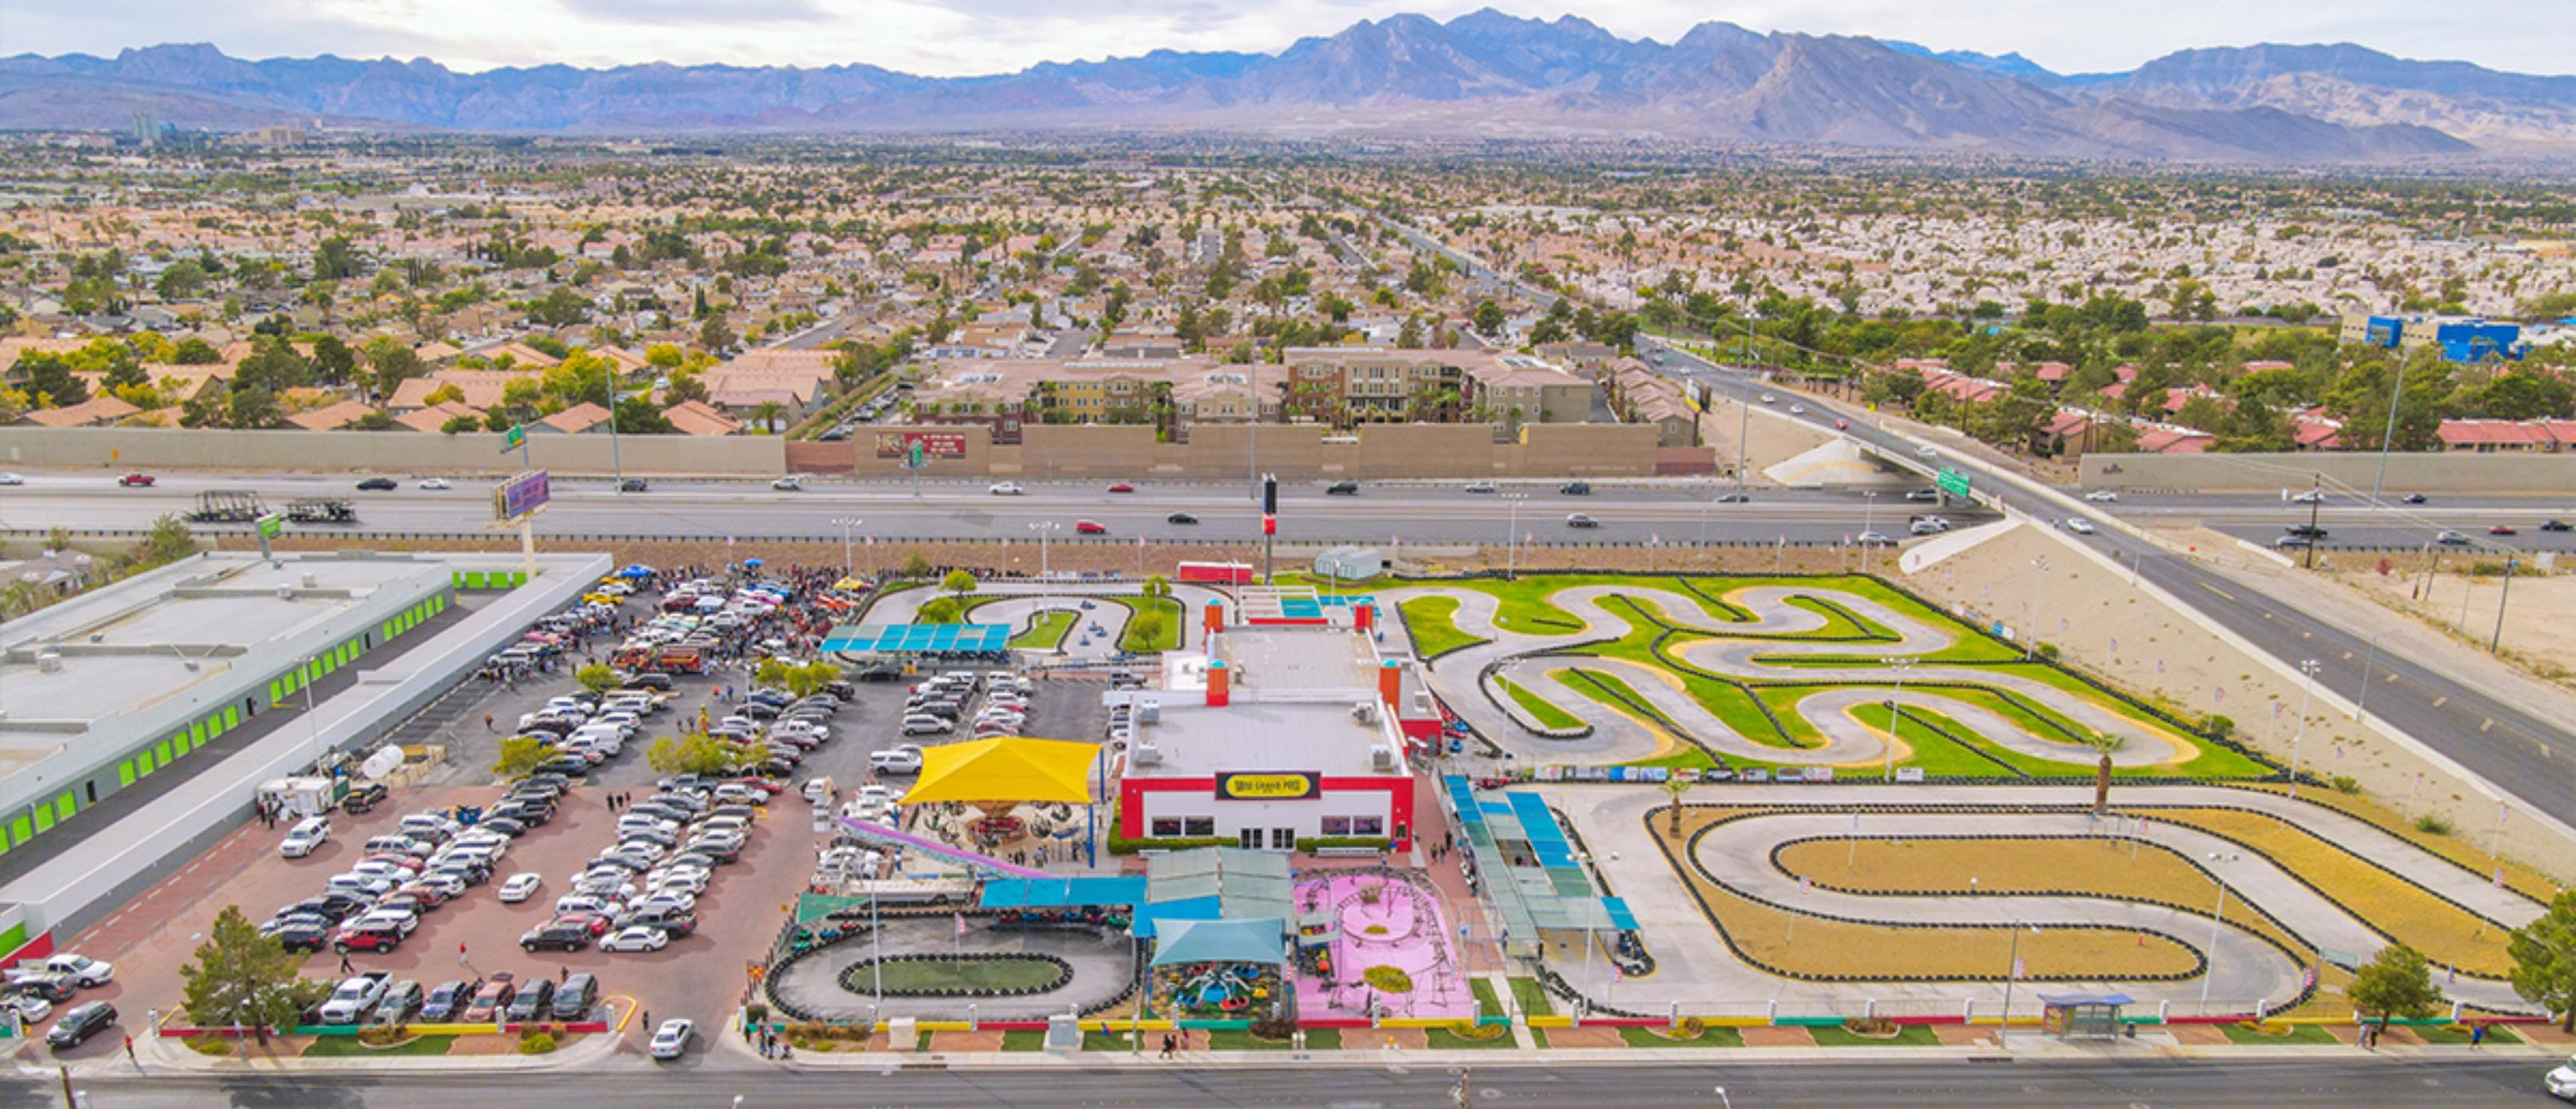 Las Vegas Mini Grand Prix set to celebrate 30th anniversary